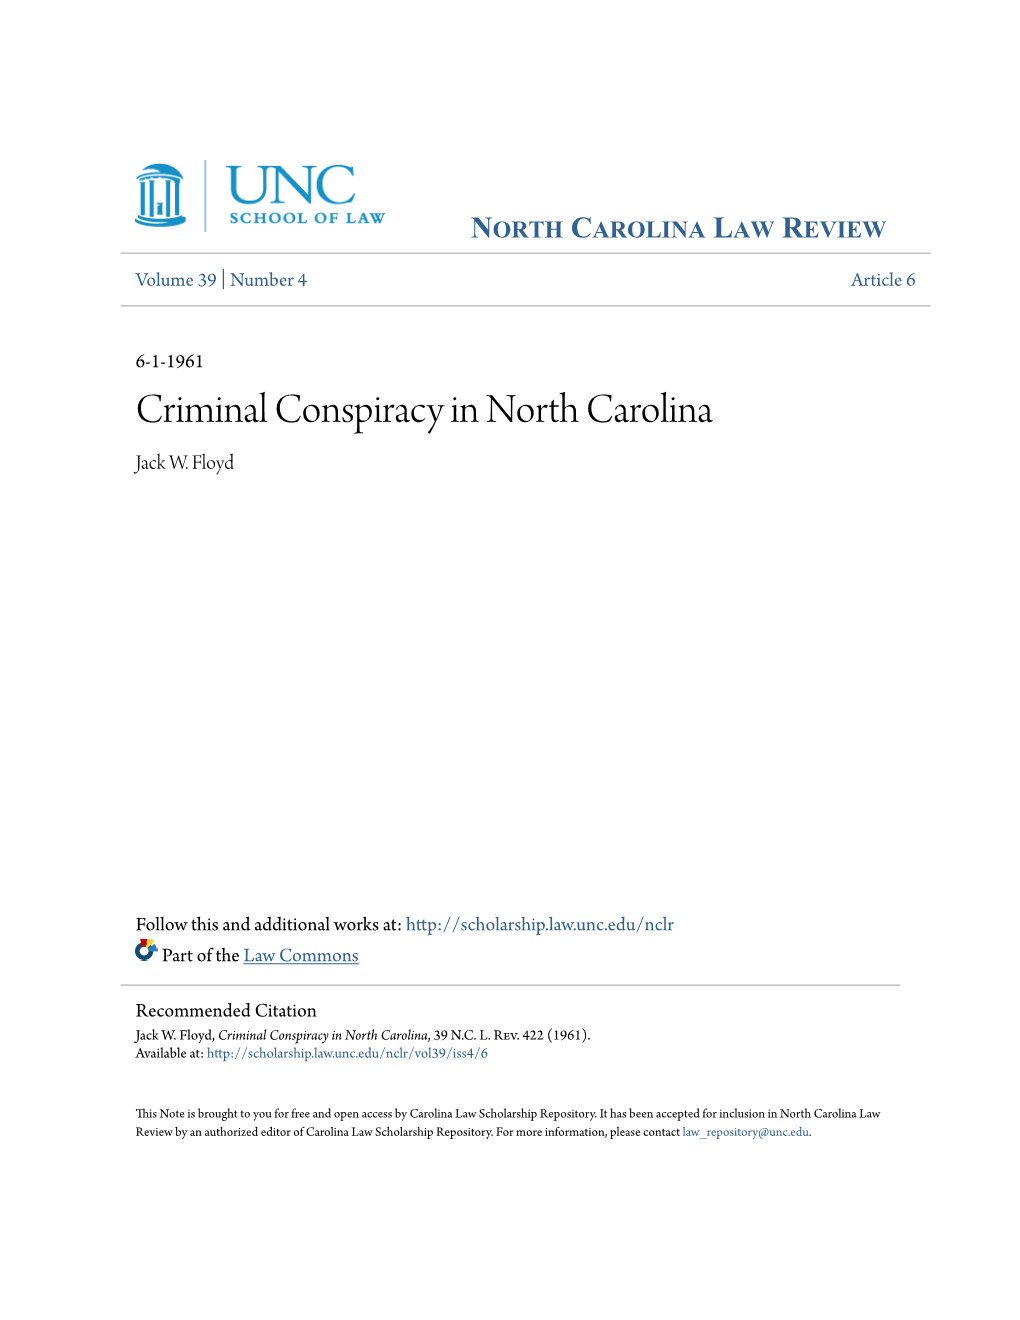 Criminal Conspiracy in North Carolina Jack W